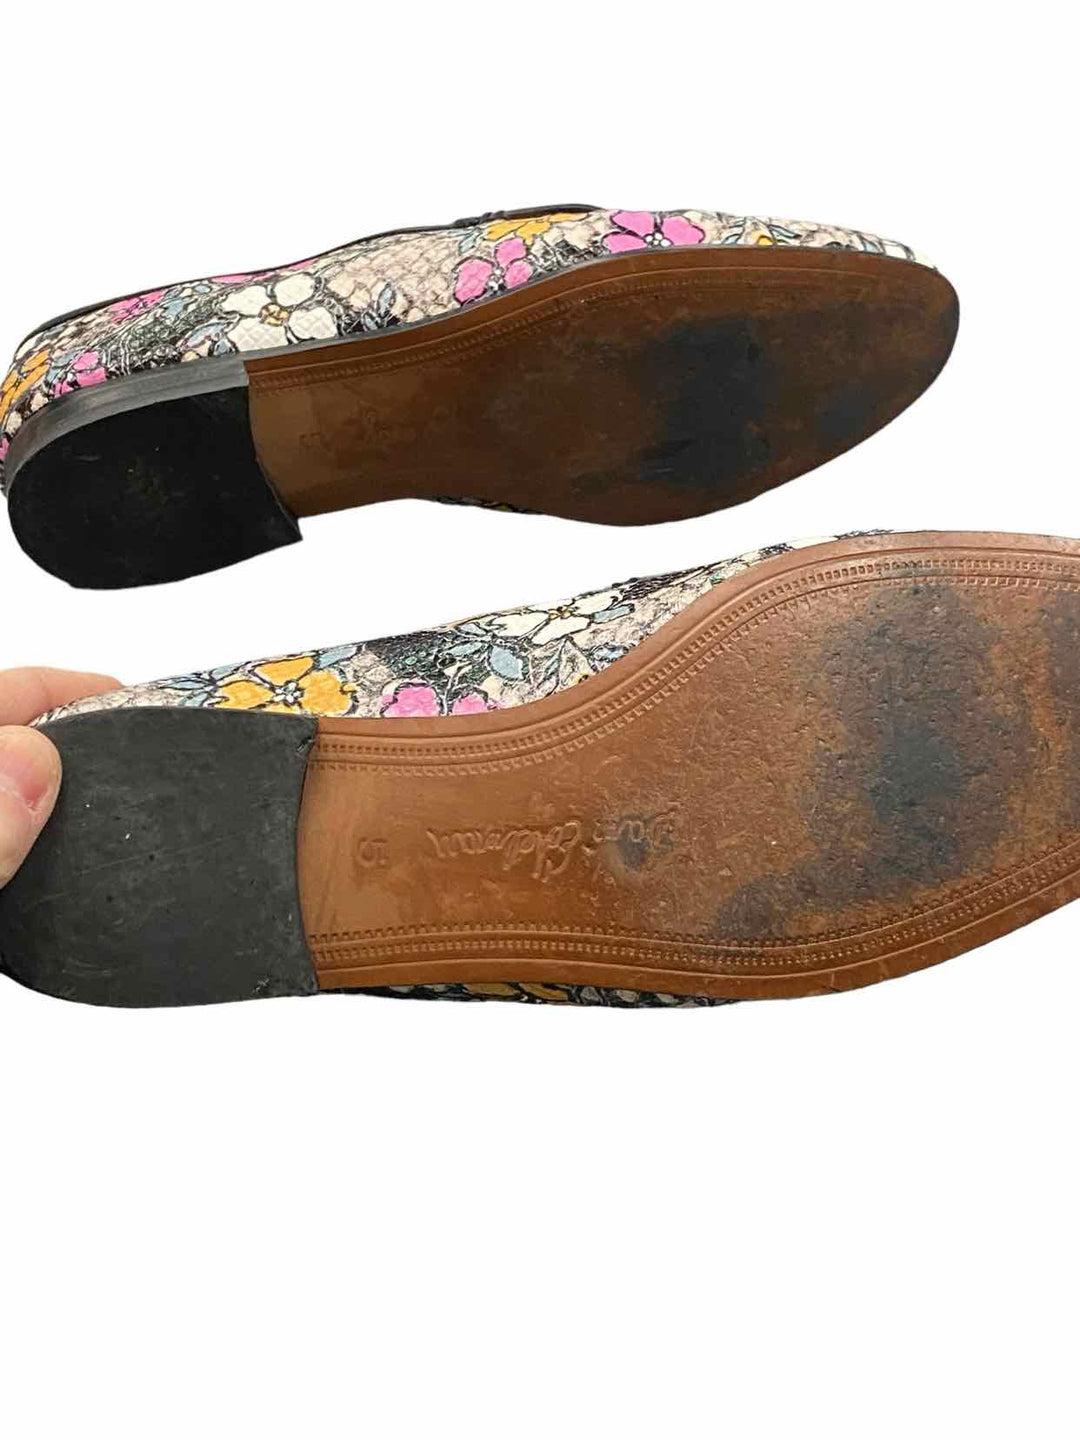 Sam Edelmon Shoe Size 5 Multi-Color Leather Flats